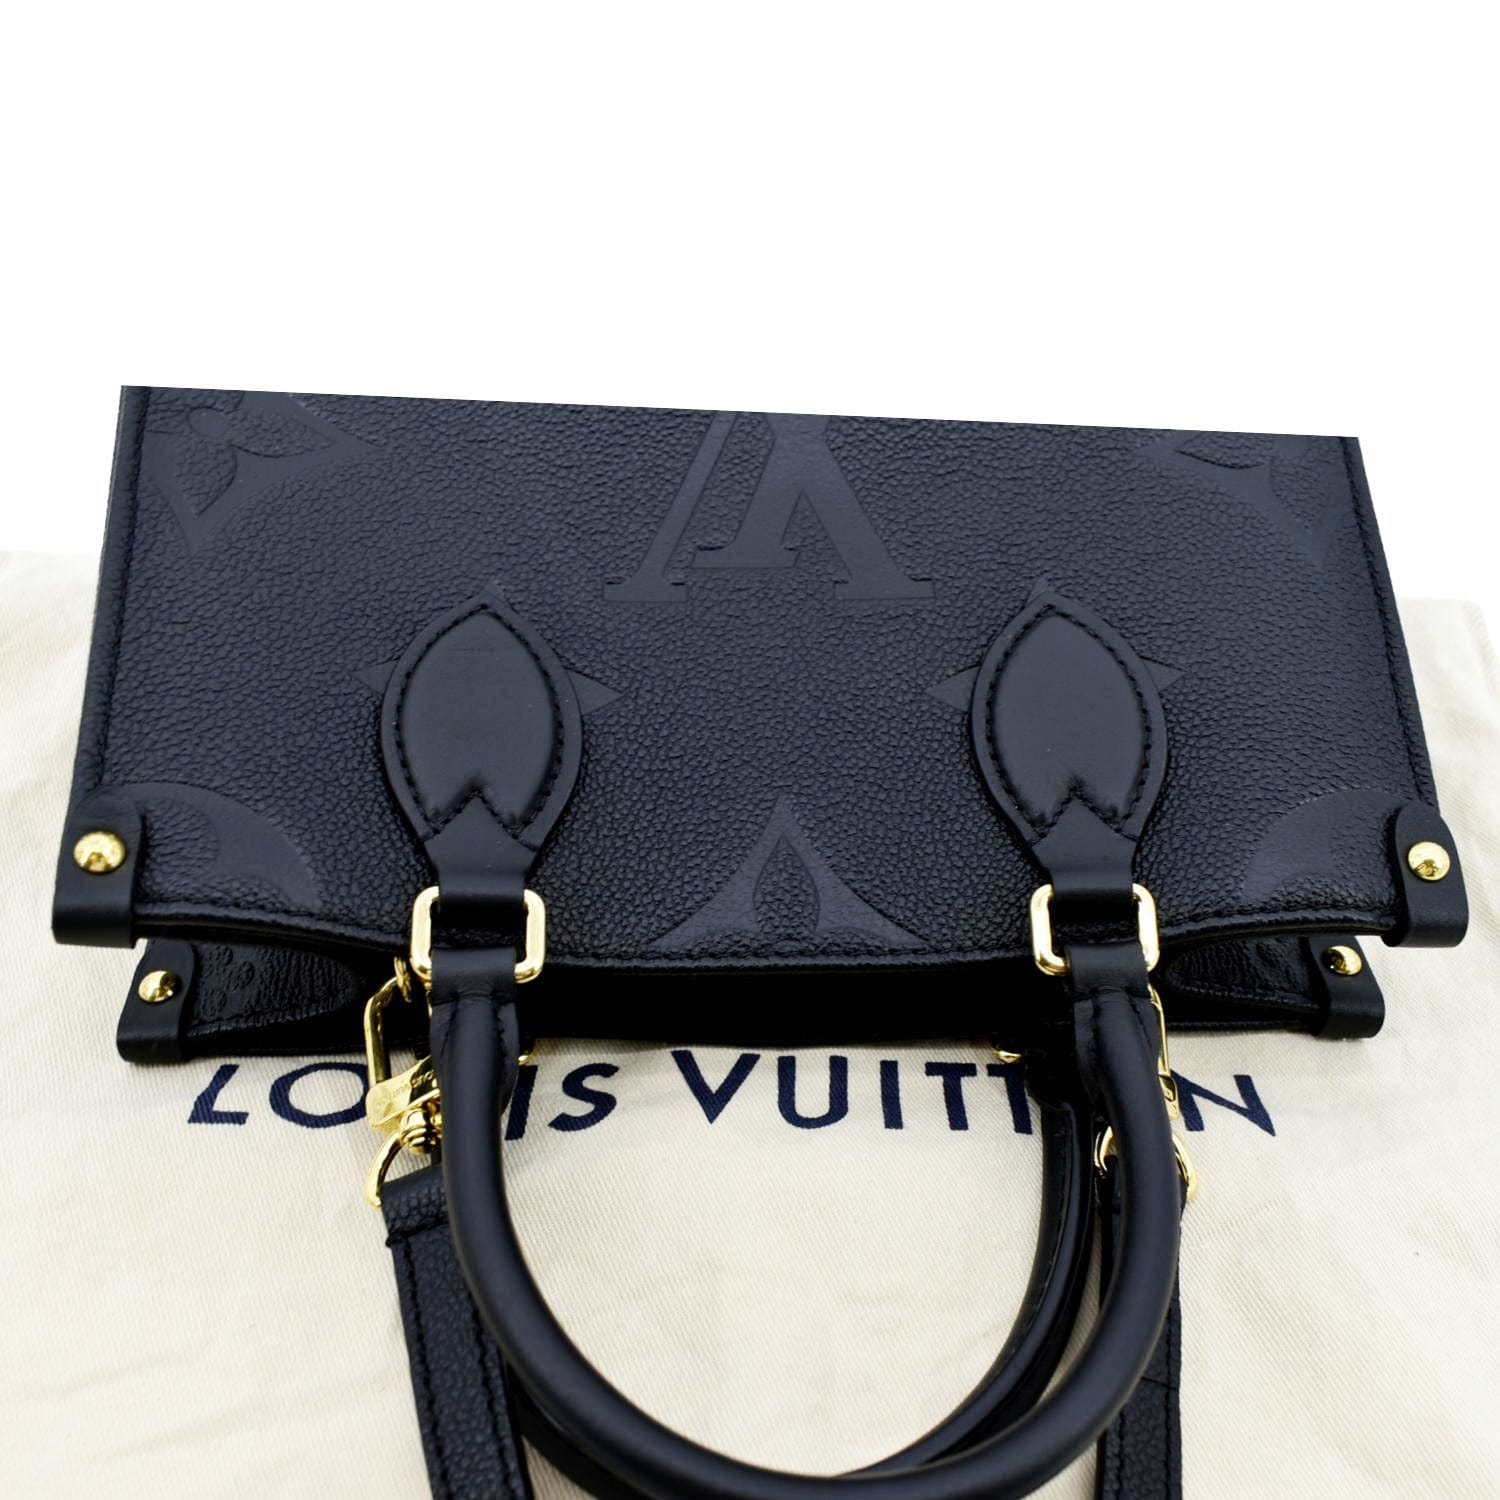 OnTheGo PM Monogram Empreinte Leather - Handbags